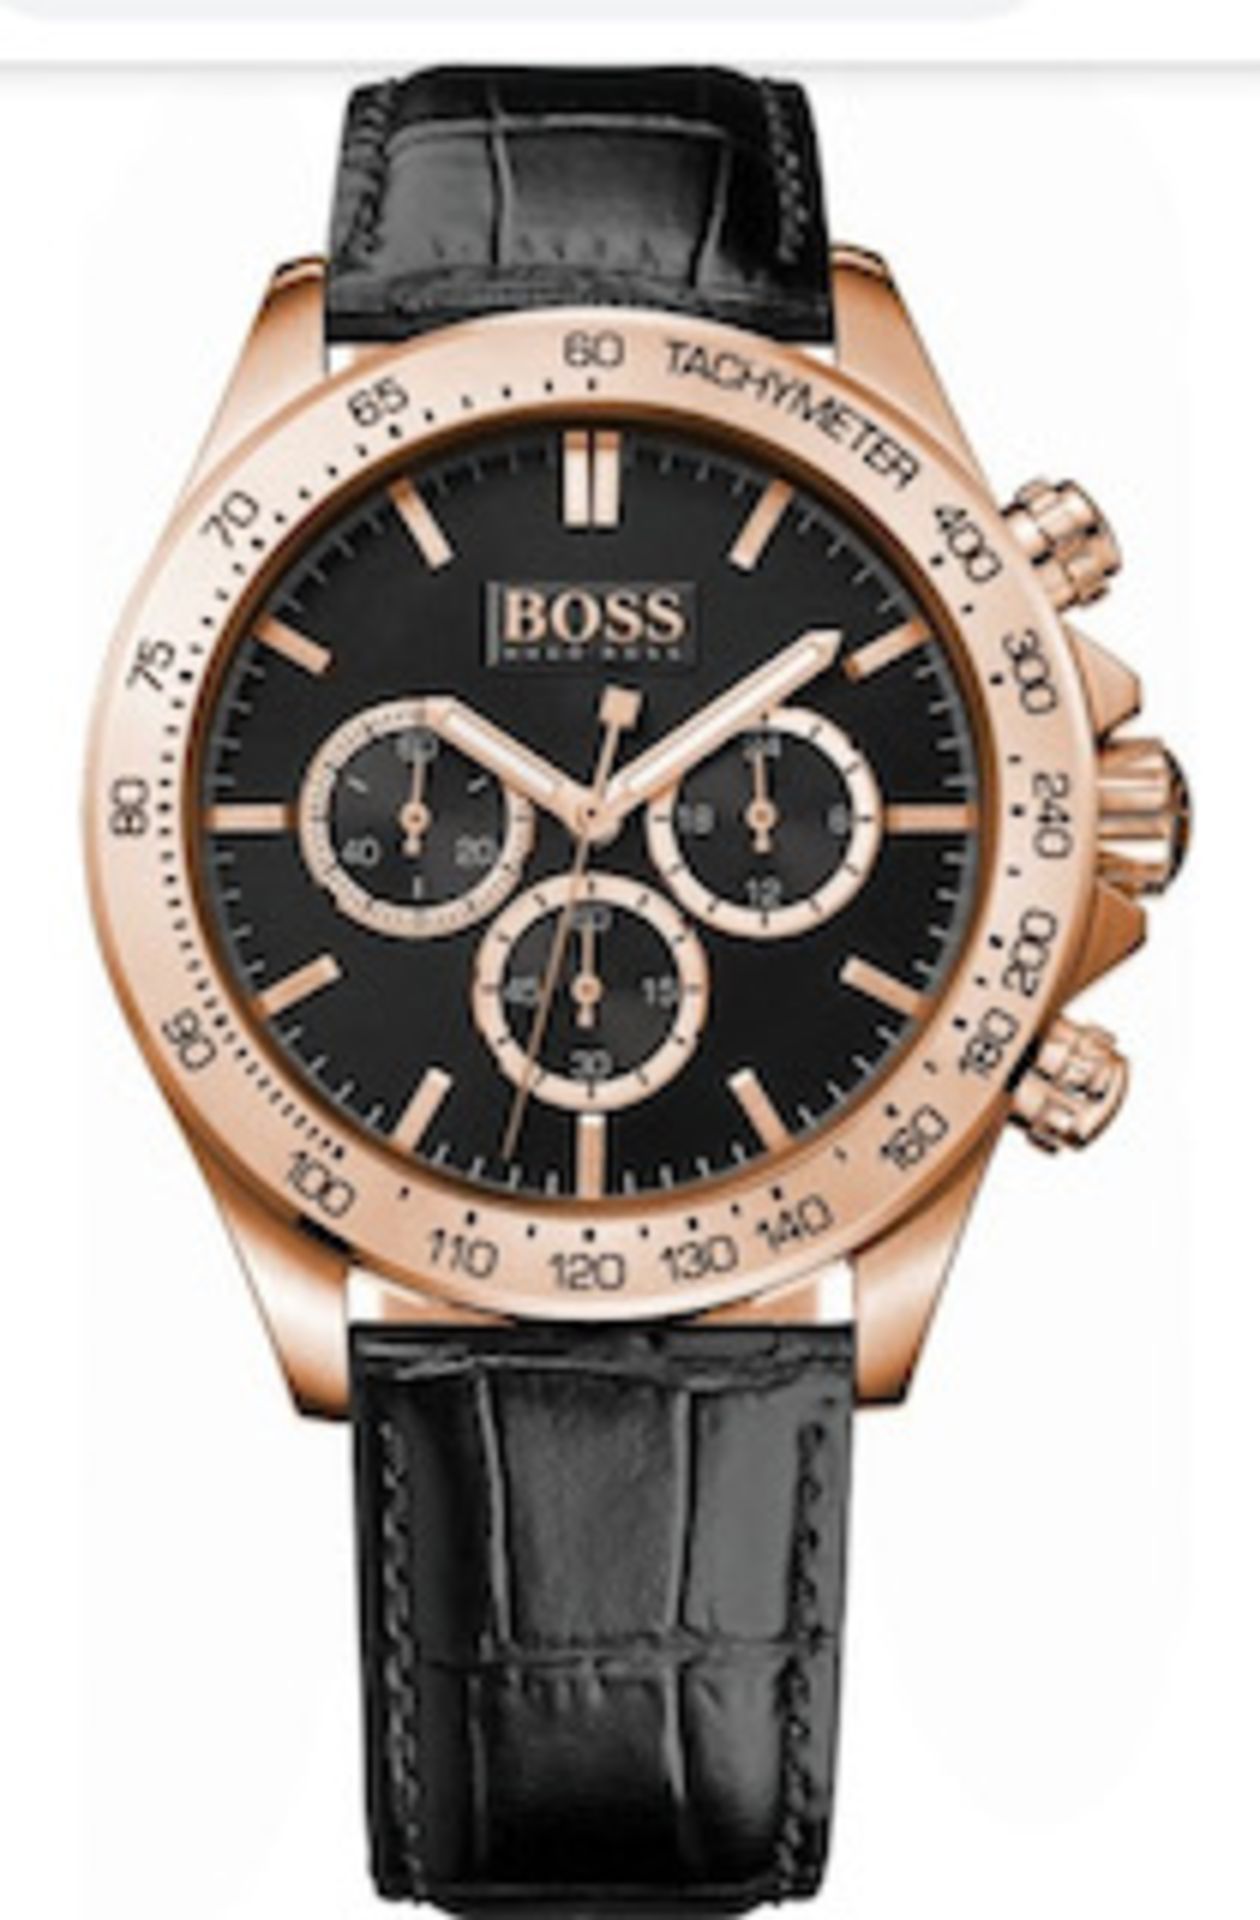 Hugo Boss 1513179 Men's Ikon Rose Gold Bezel Black Leather Strap Chronograph Watch - Image 2 of 8